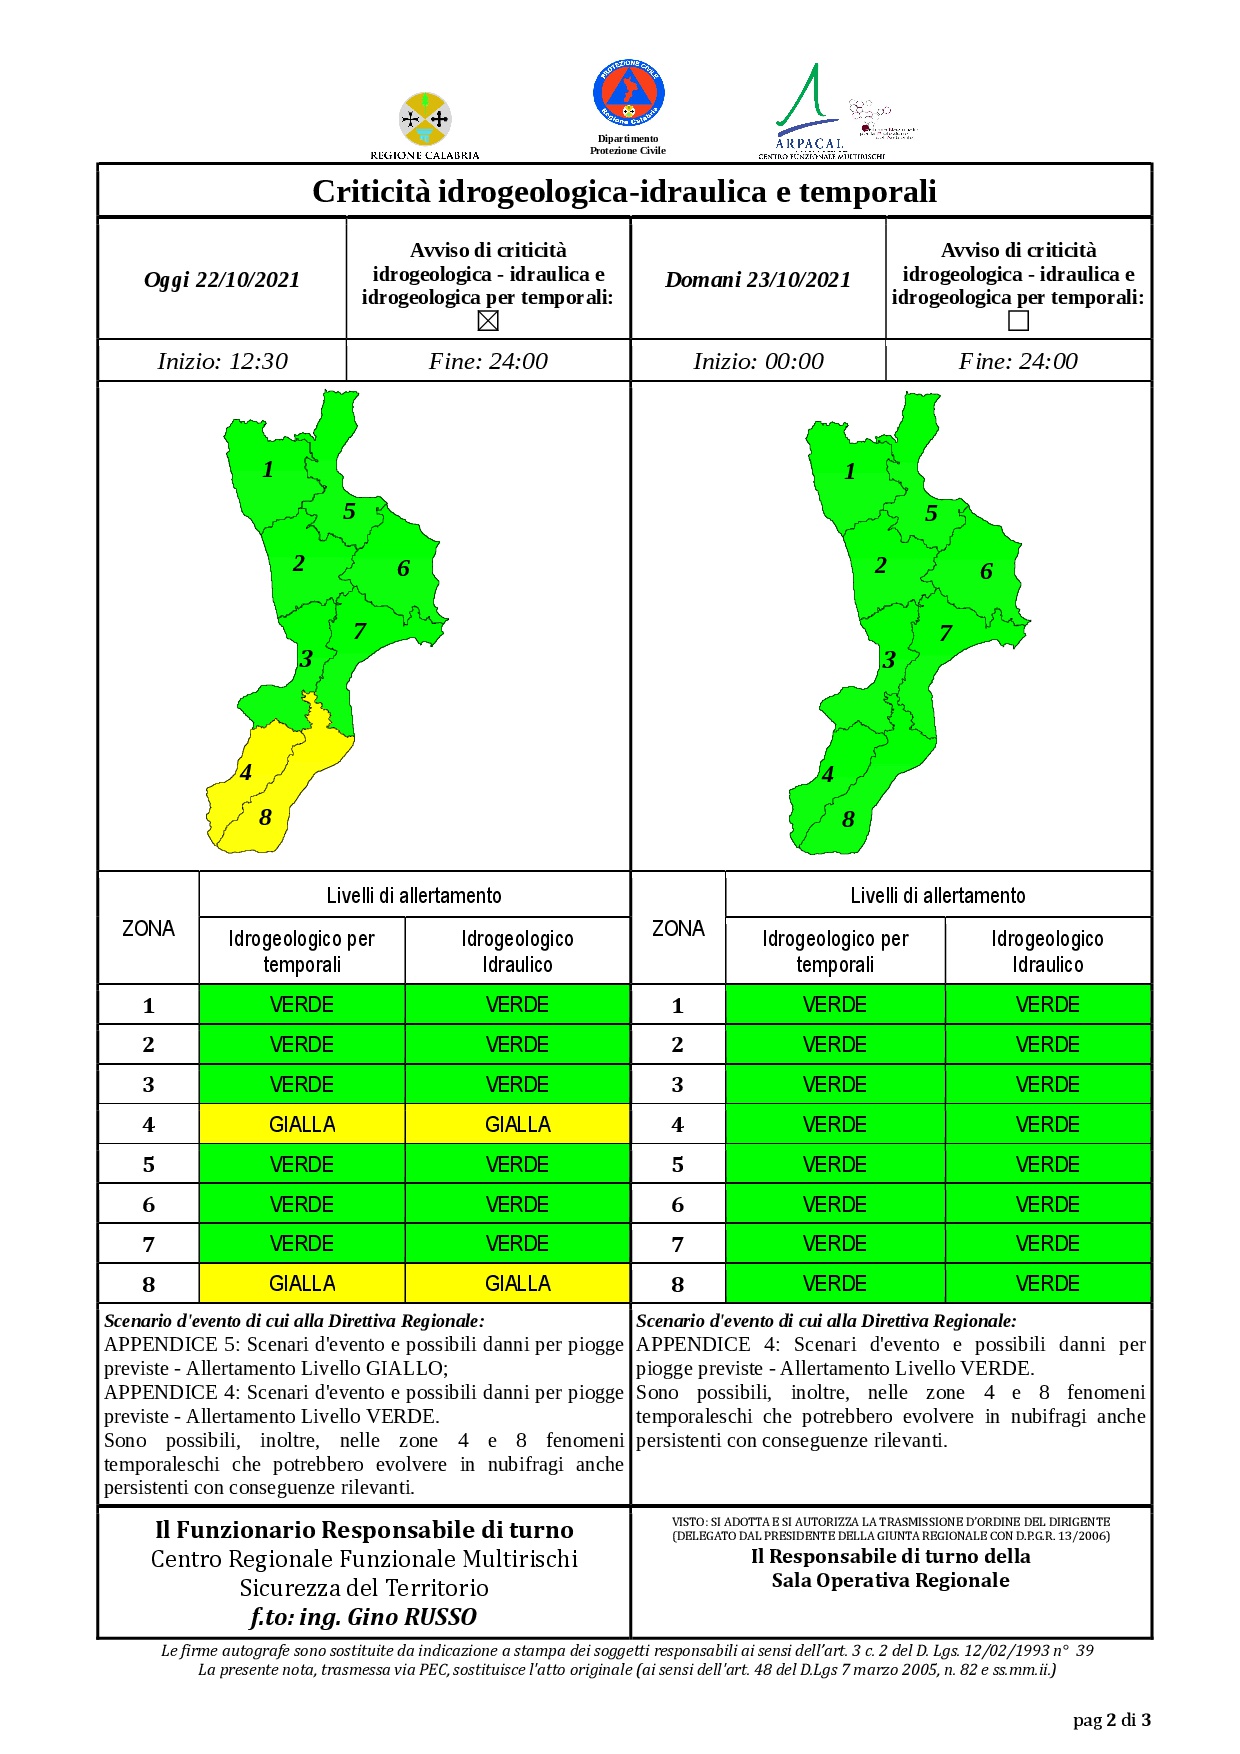 Criticità idrogeologica-idraulica e temporali in Calabria 22-10-2021